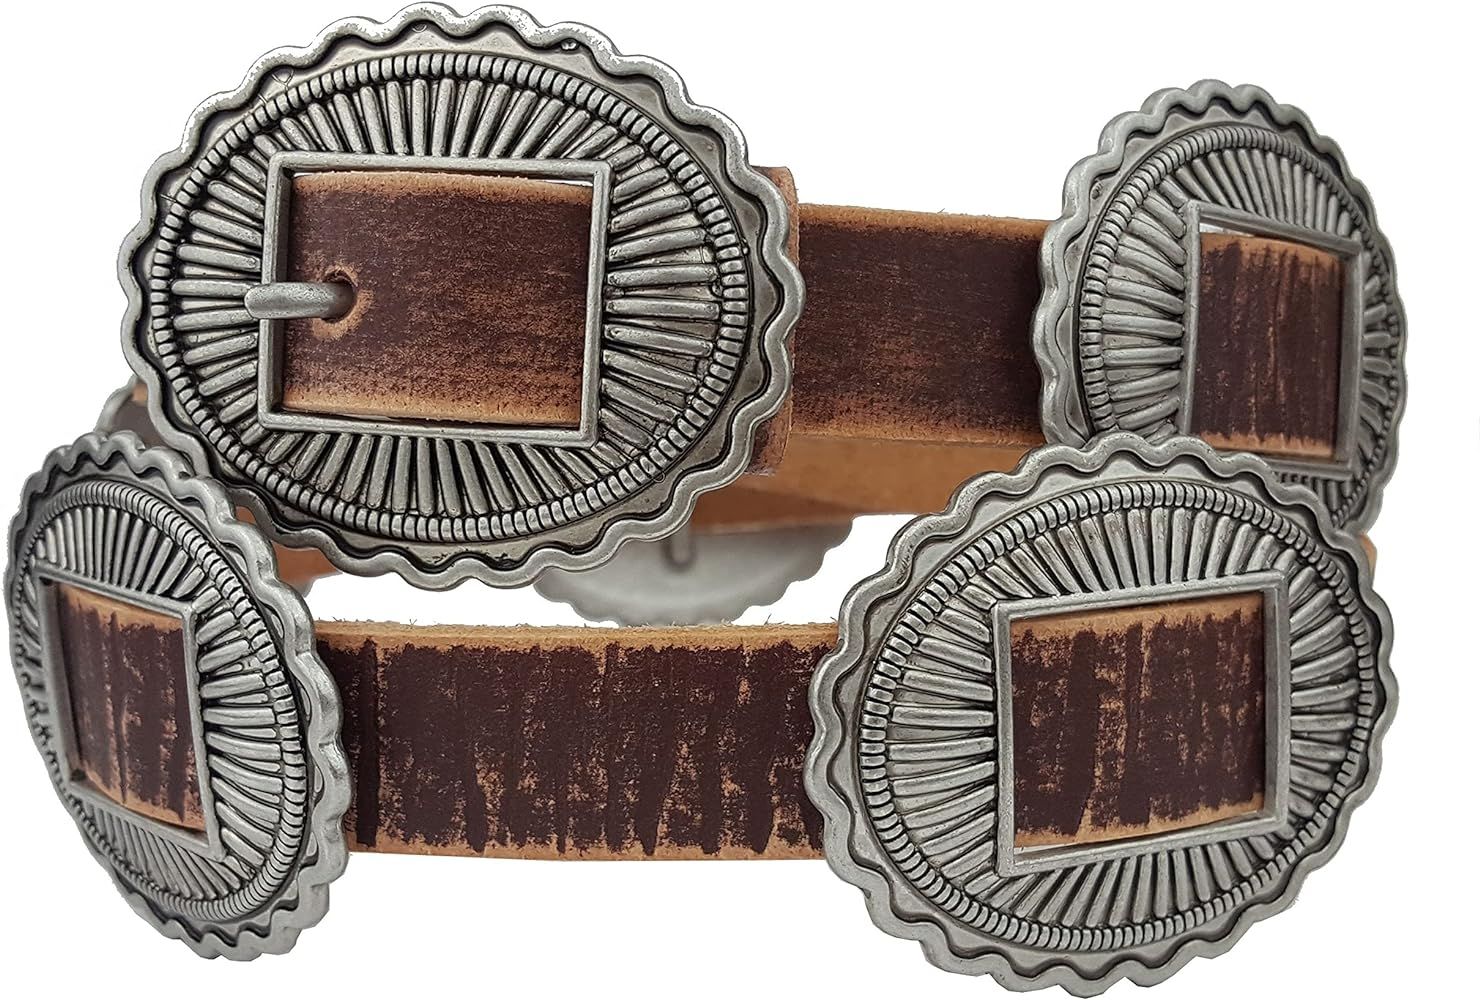 Western Skinny Leather belt with Conchos | Amazon (US)